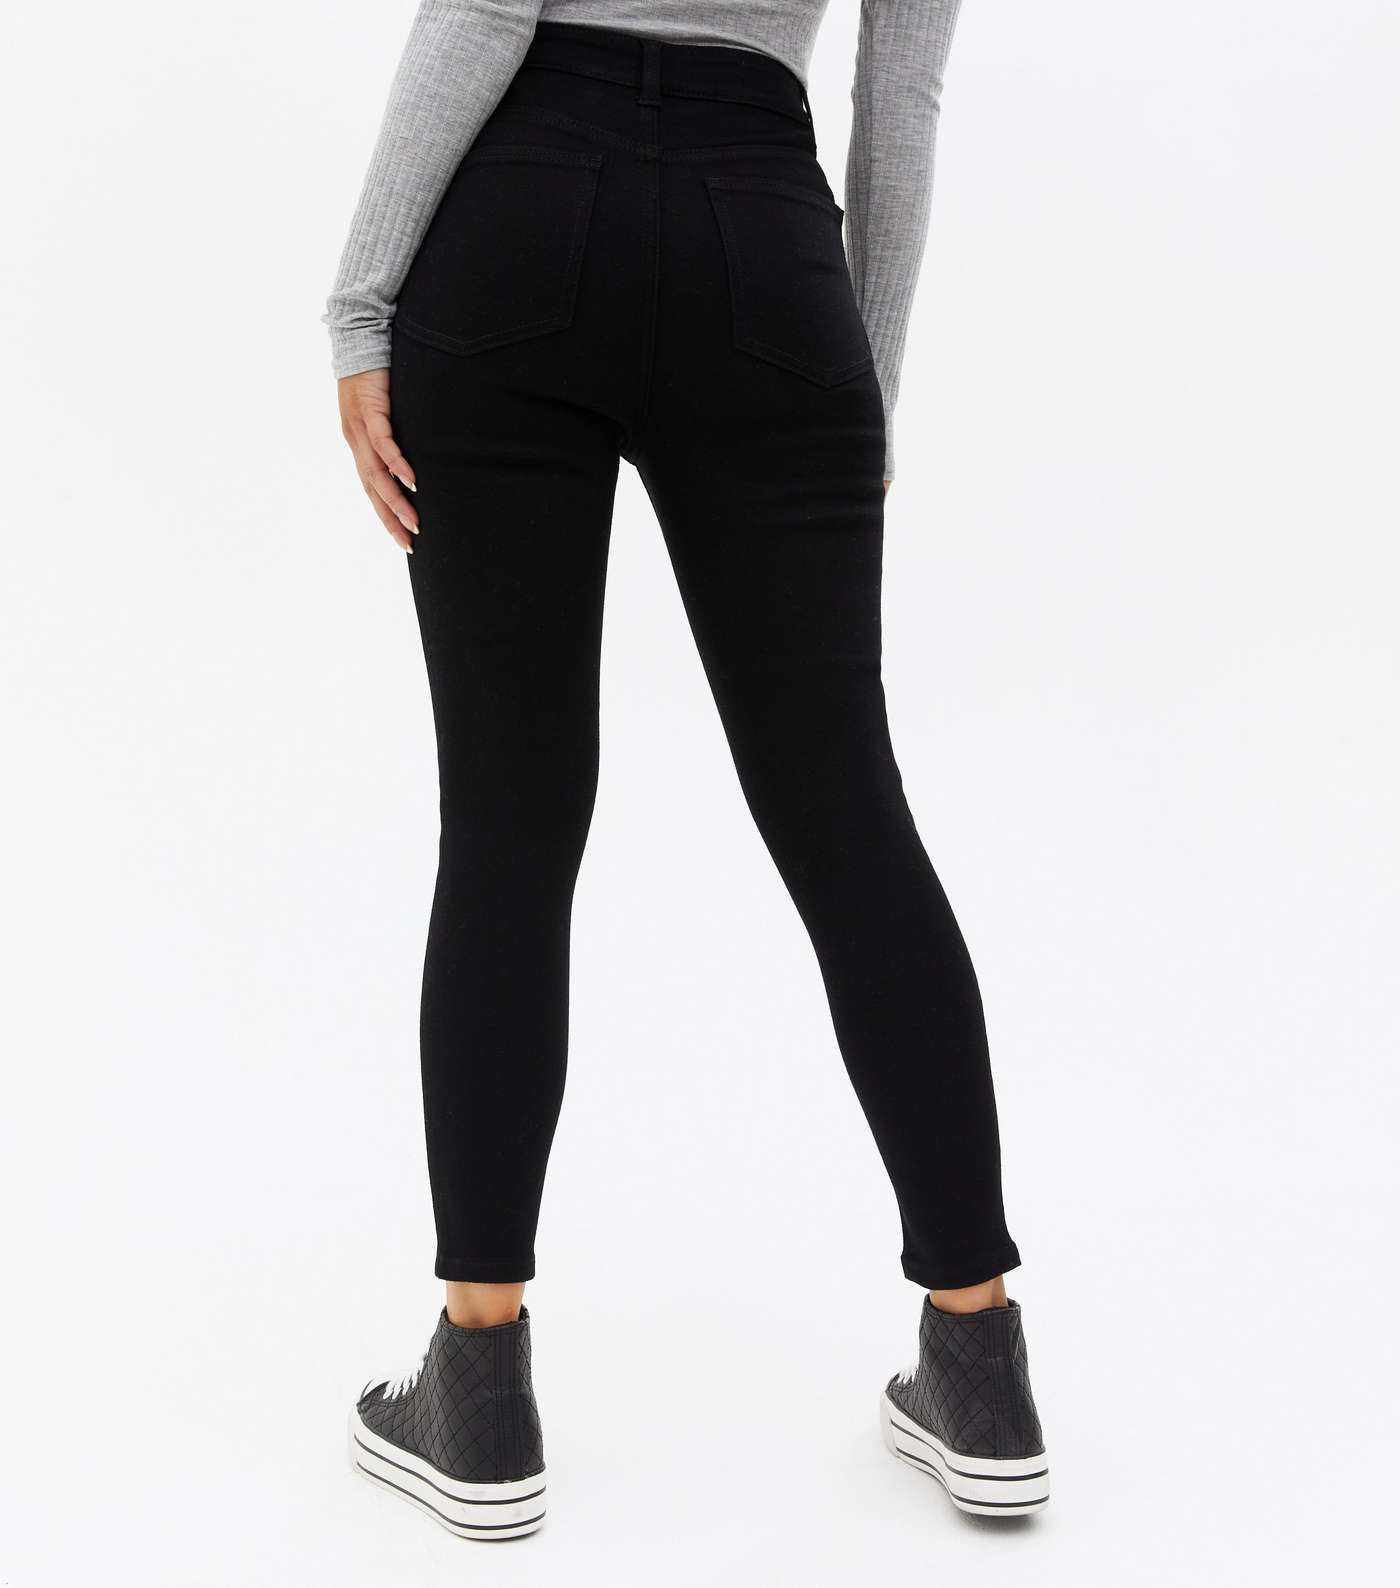 Petite Black Short High Waist Hallie Super Skinny Jeans Image 4